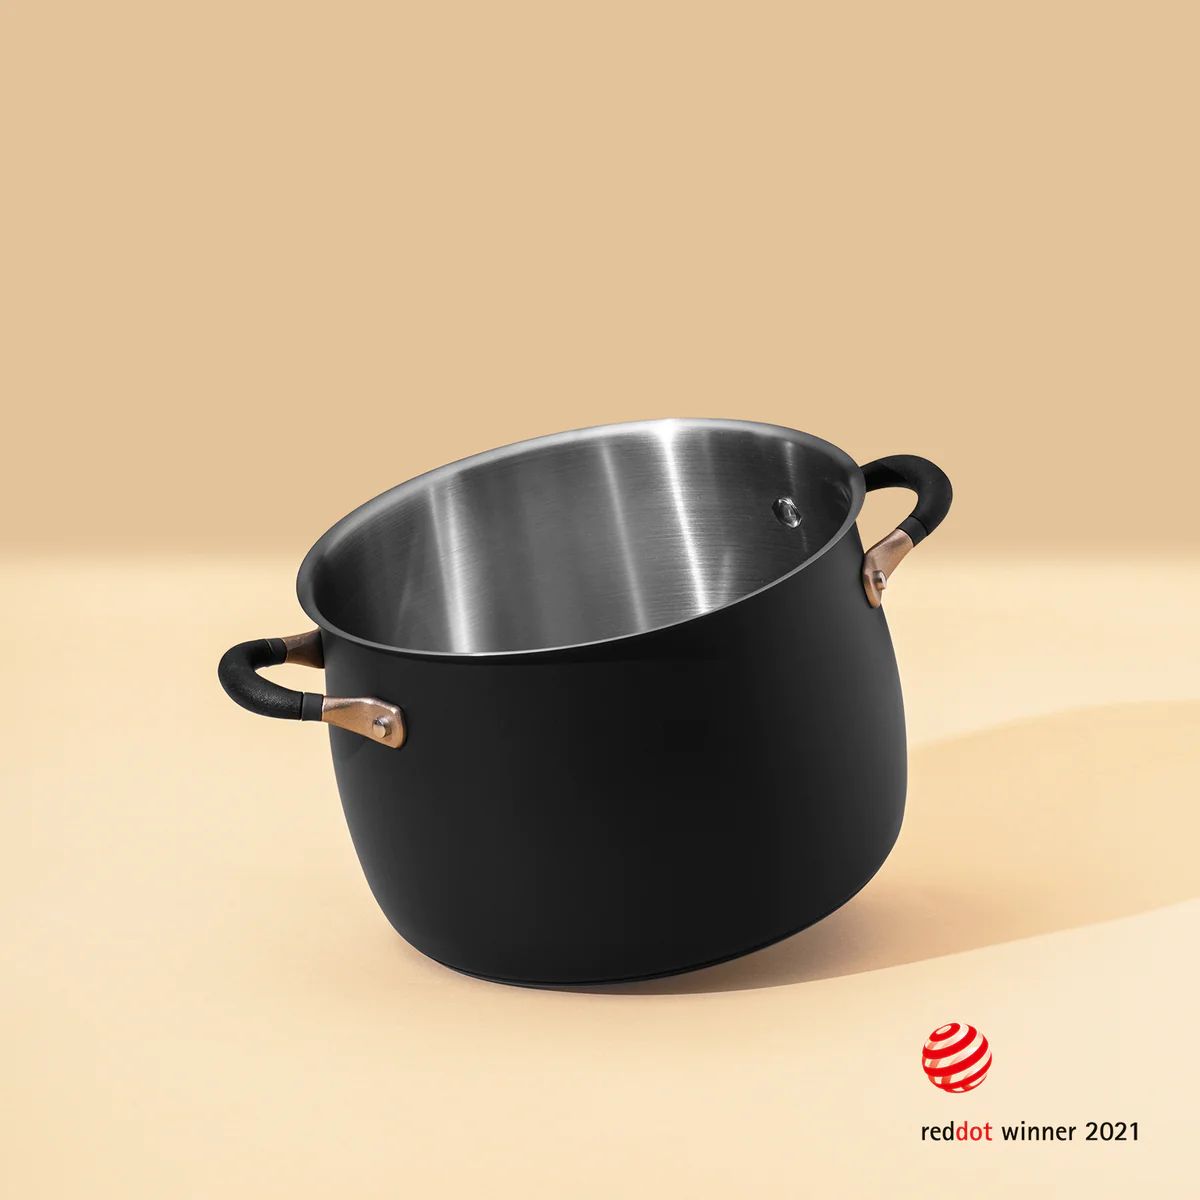 Stainless Steel Stockpot | Meyer Brand Cookware